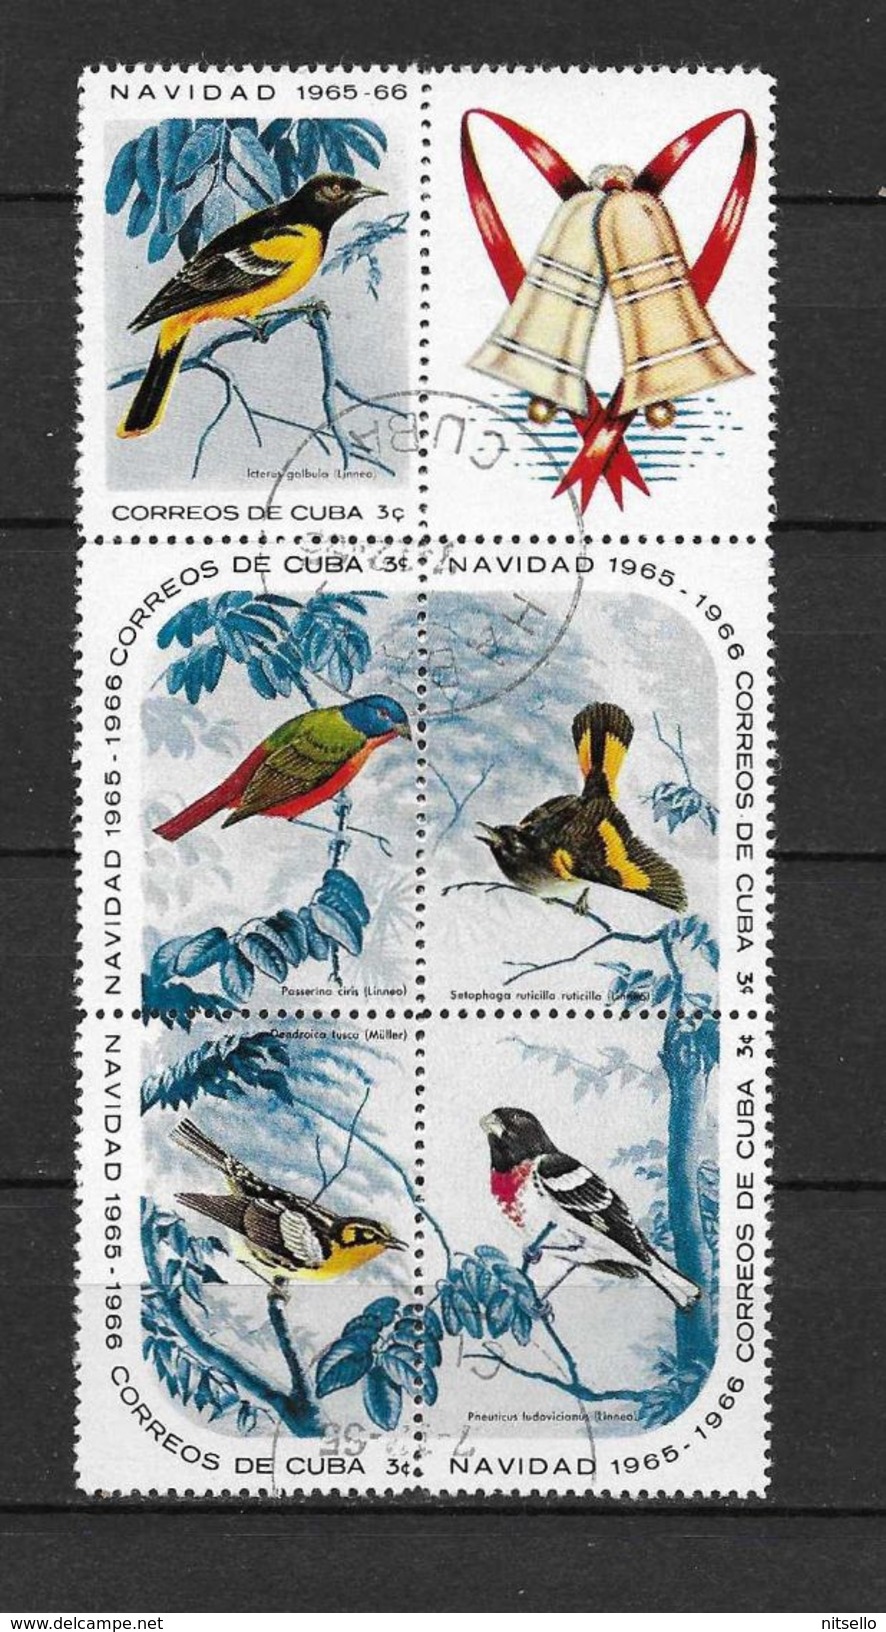 LOTE 2154   ///   (C070) CUBA   NAVIDAD 1965   ¡¡¡¡¡ LIQUIDATION !!!!!!! - Used Stamps